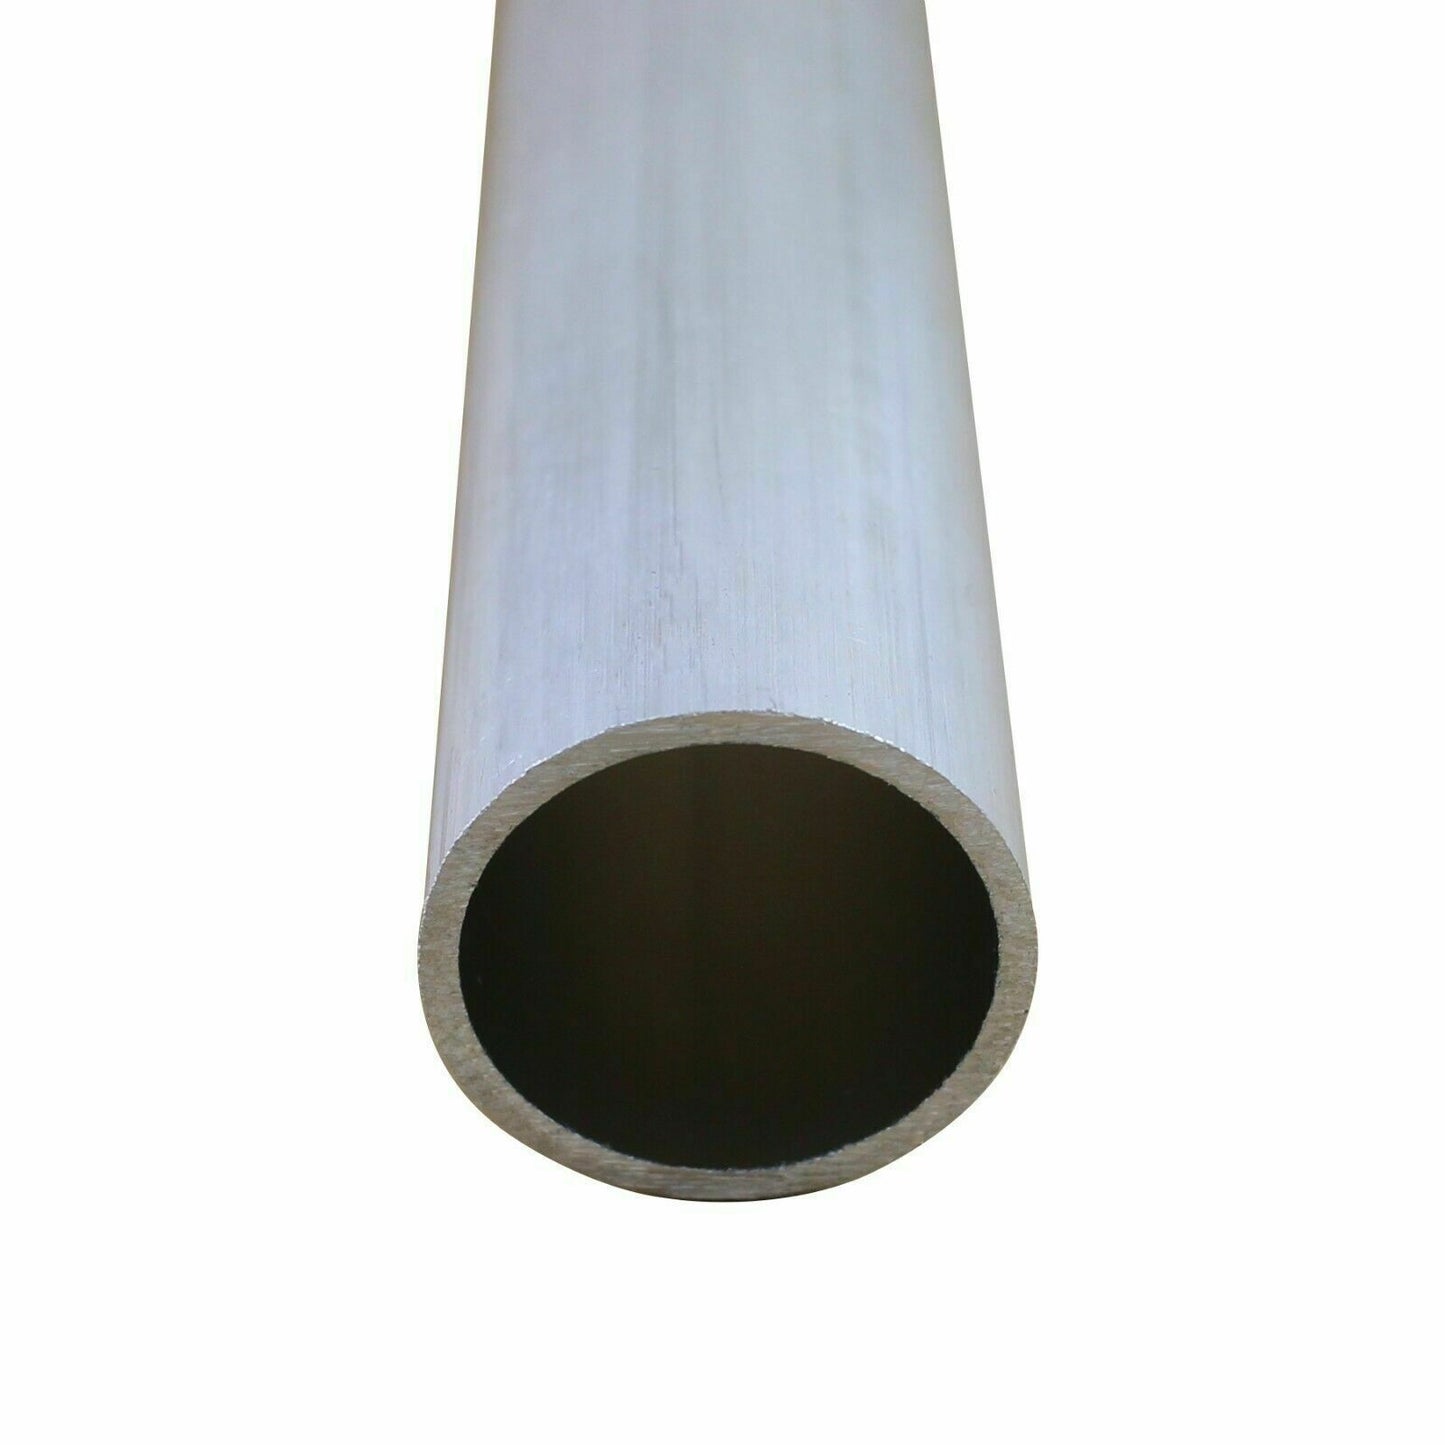 OD 18 mm ID 12 mm 1 pièce Tube rond en aluminium